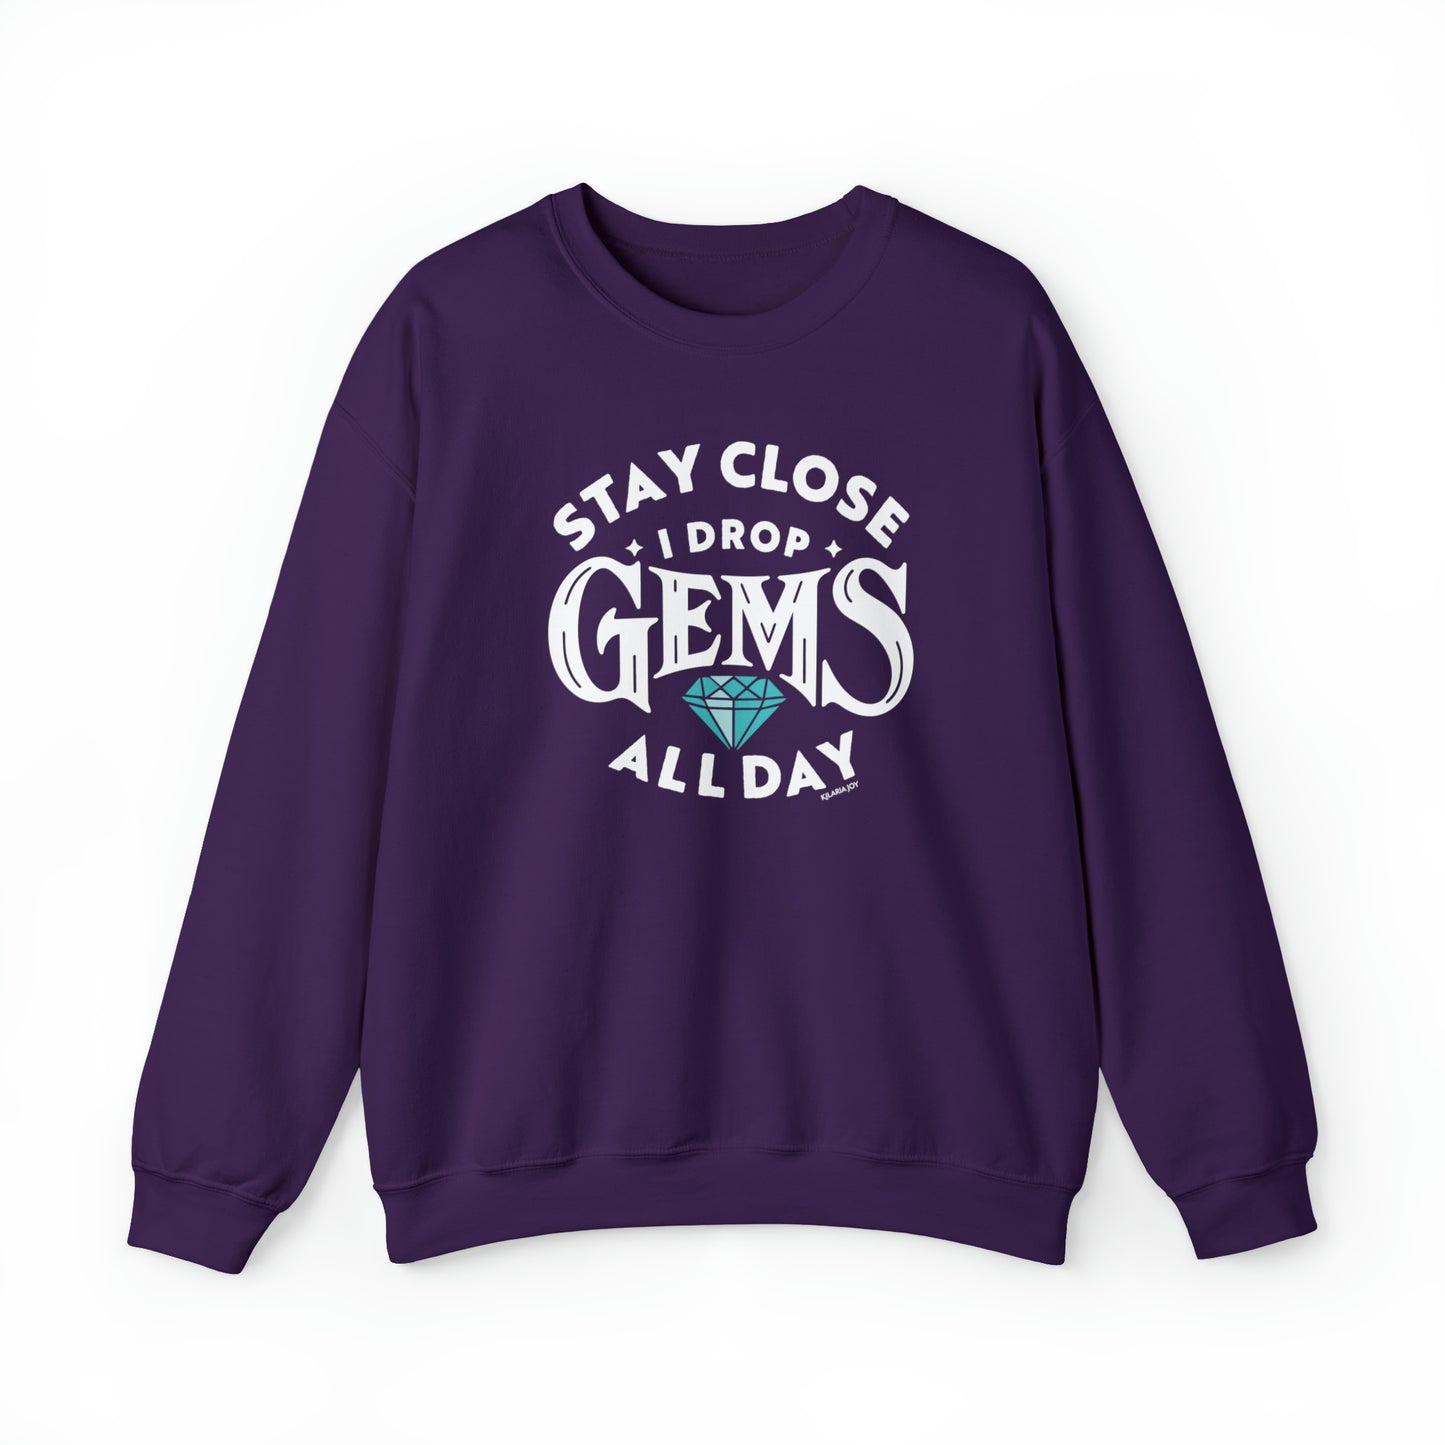 Dropping Gems Women's Classic Fit Sweatshirt